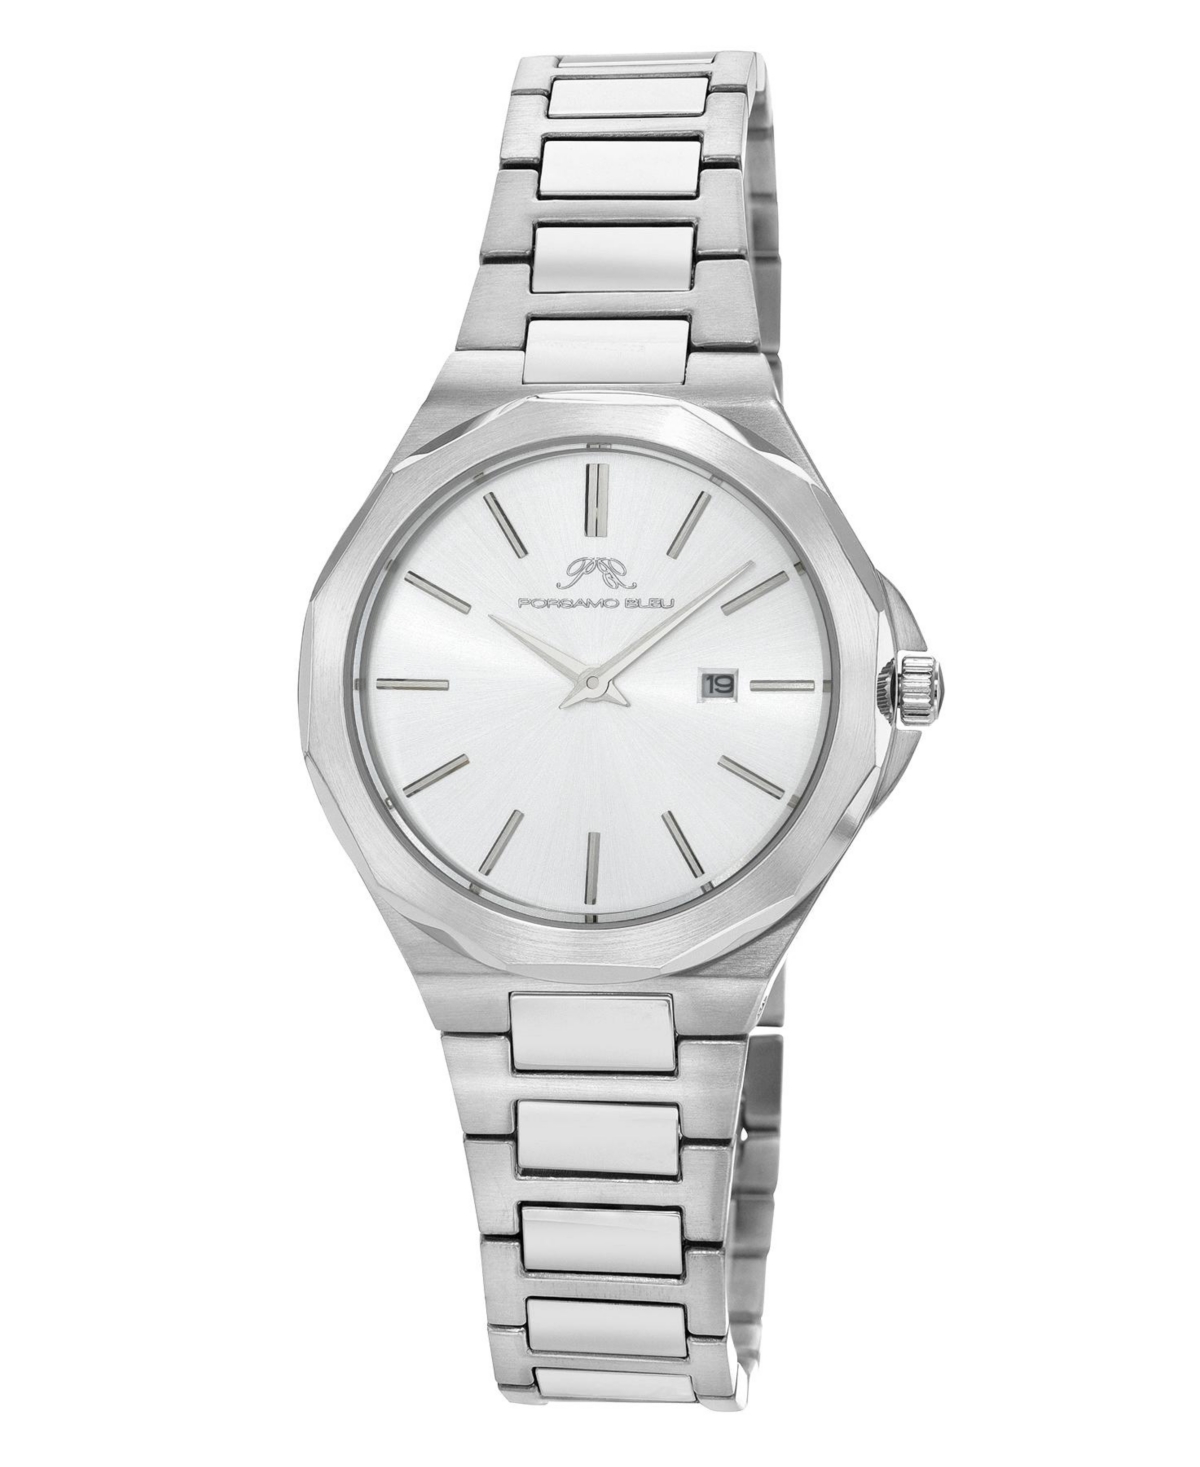 Victoria Stainless Steel Silver Tone Women's Watch 1241AVIS - Silver